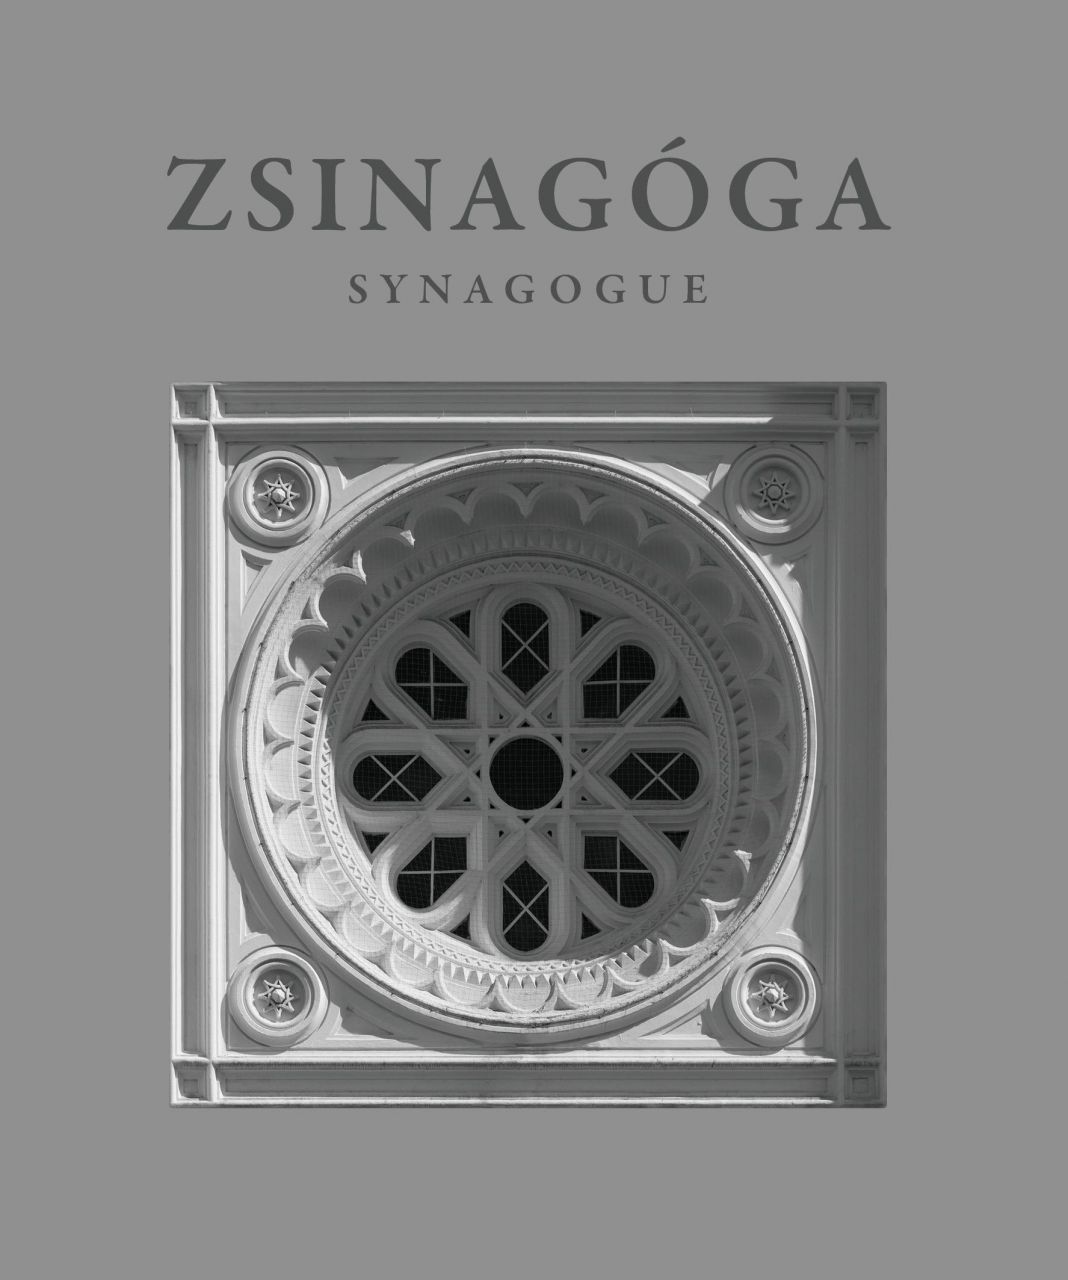 Zsinagóga - synagogue